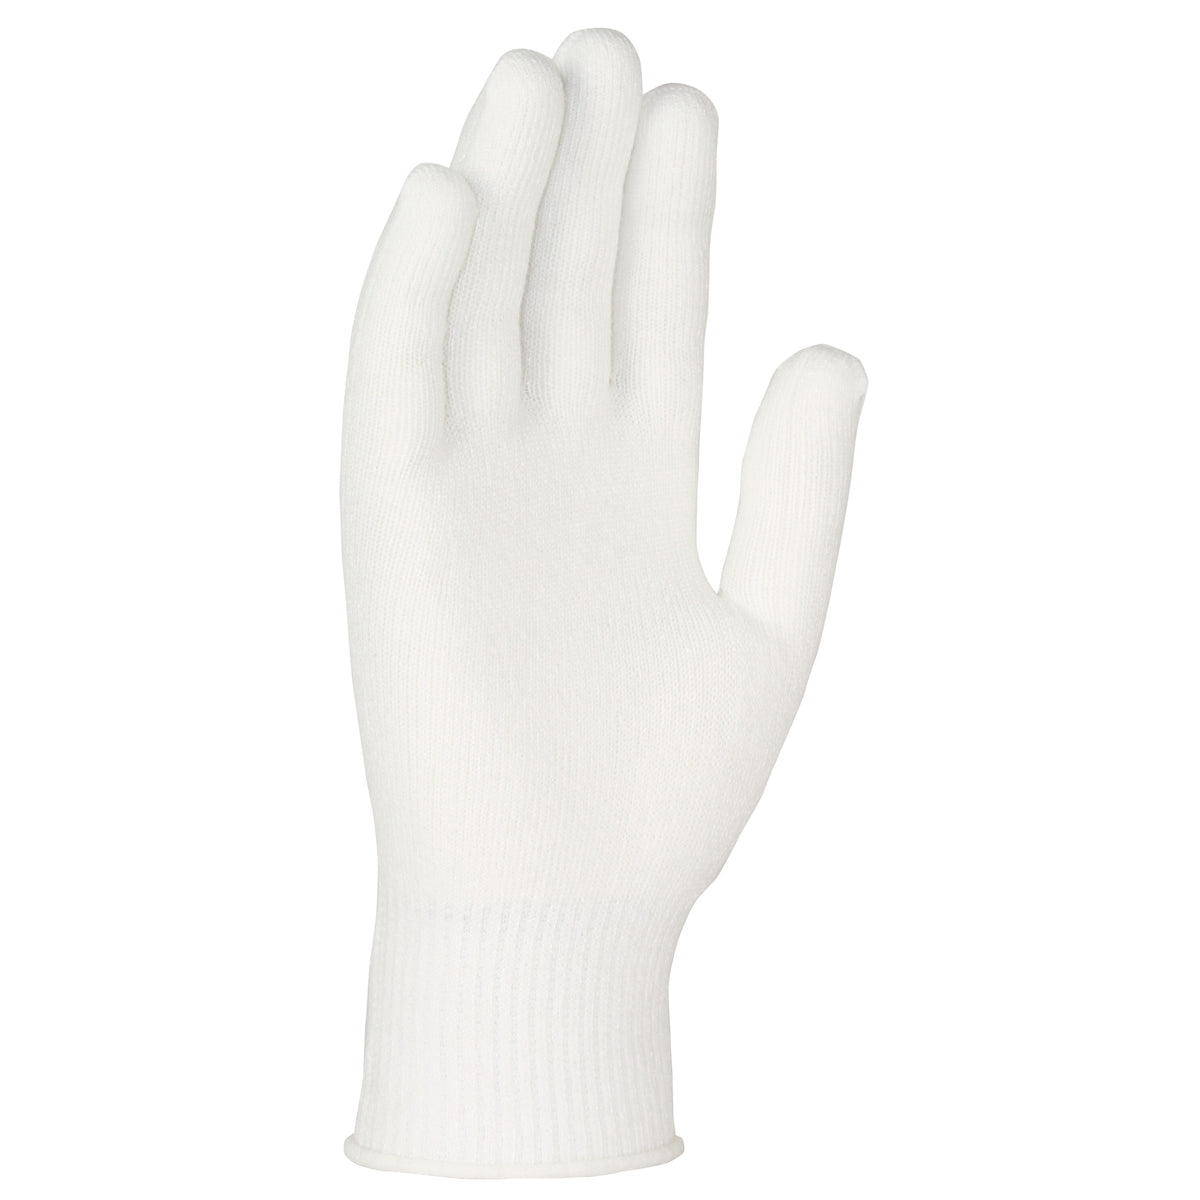 PIP M13TM-X Seamless Knit Filament Polyester Glove - Light Weight